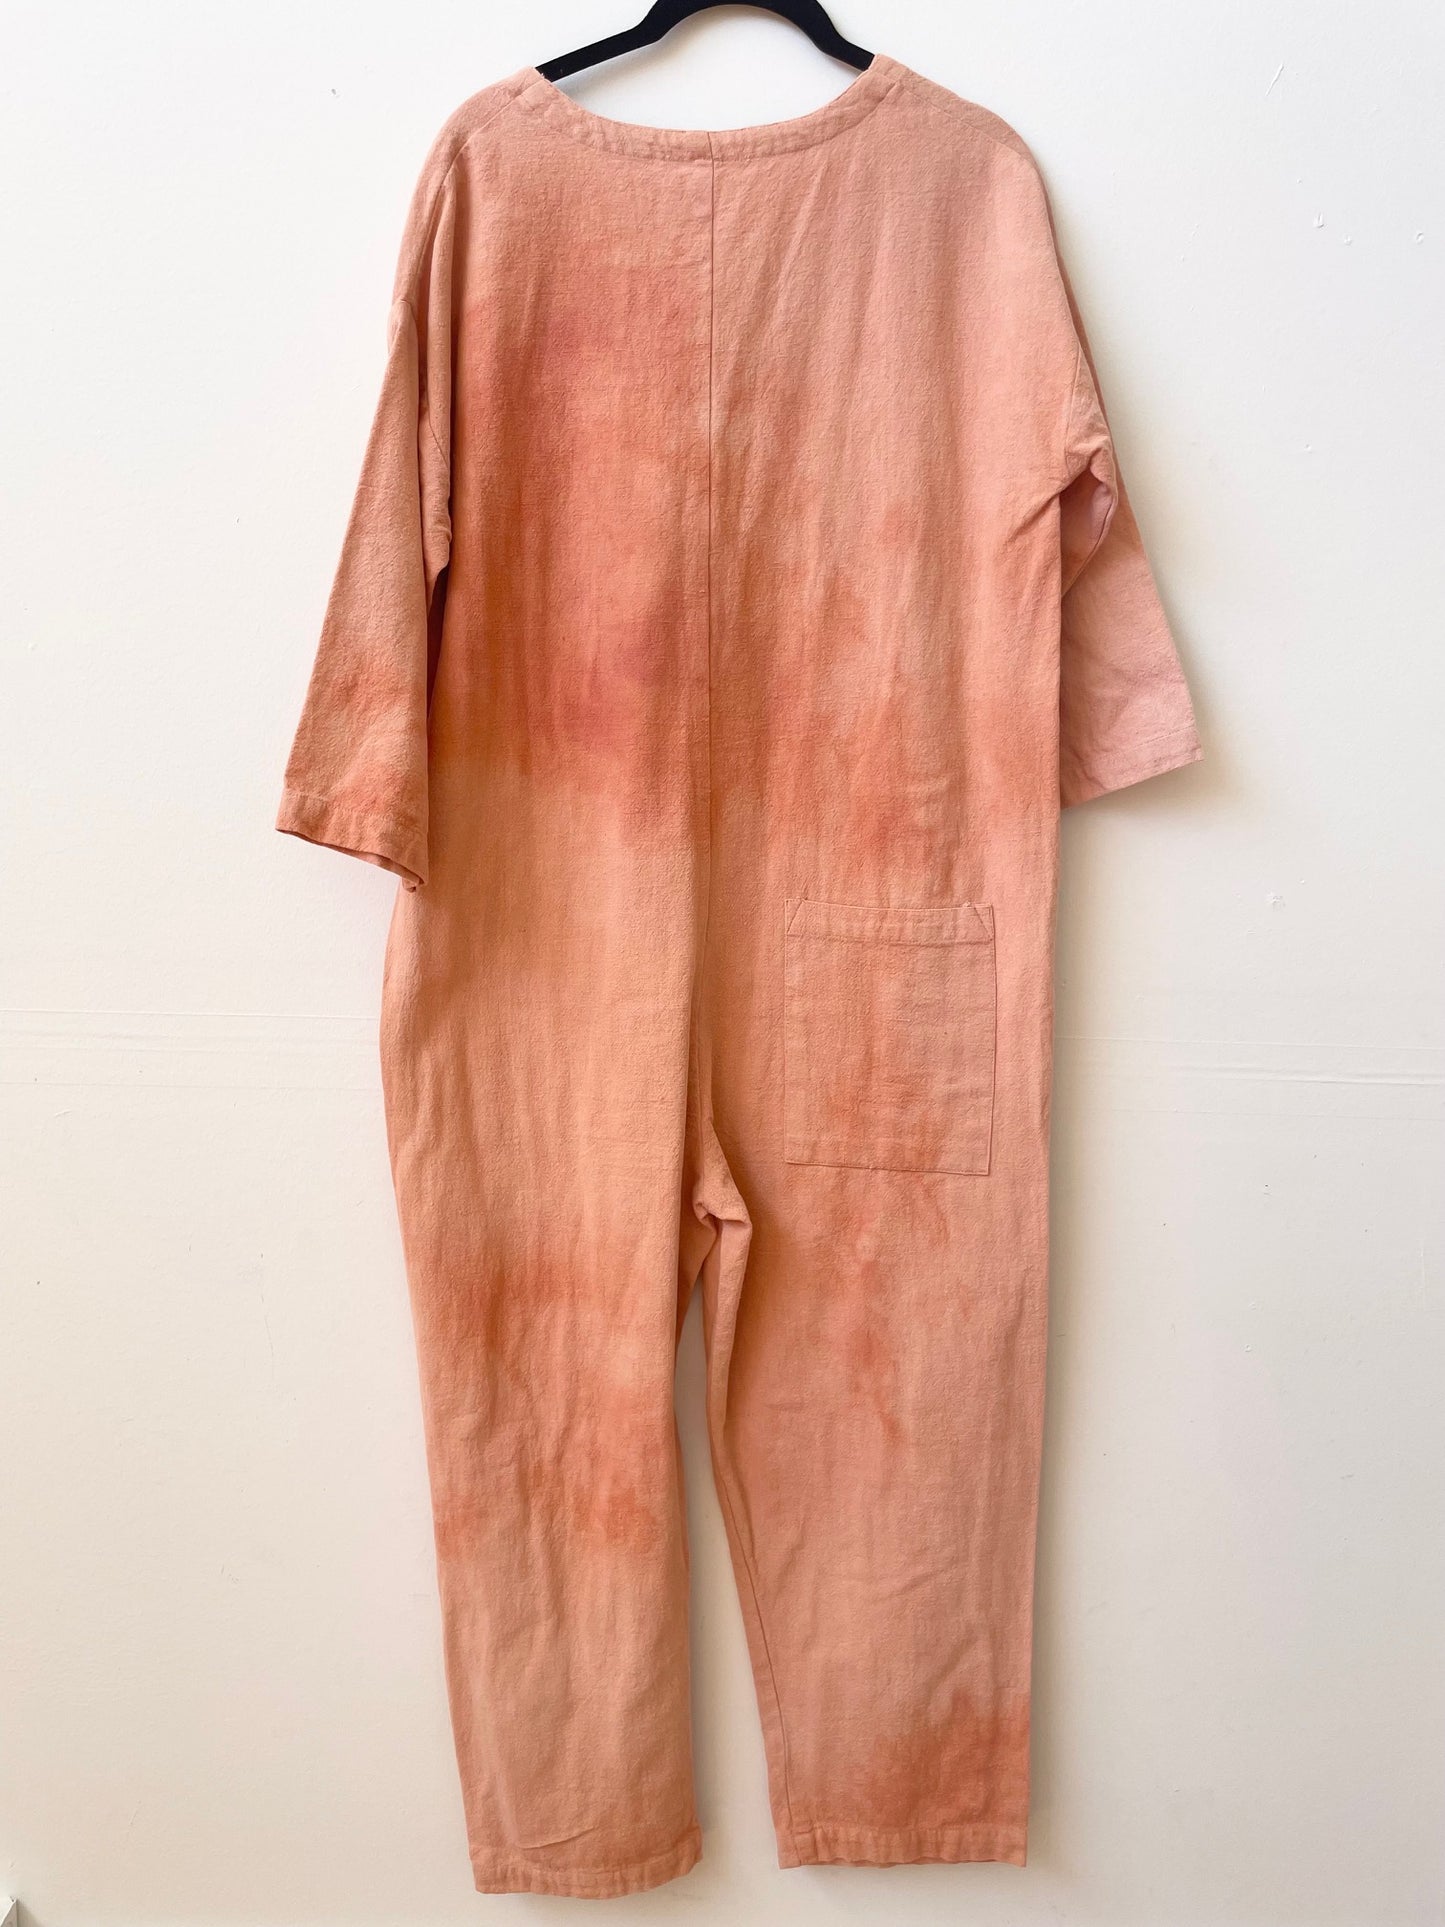 #55 Tie-dye Peach Jumpsuit S/M